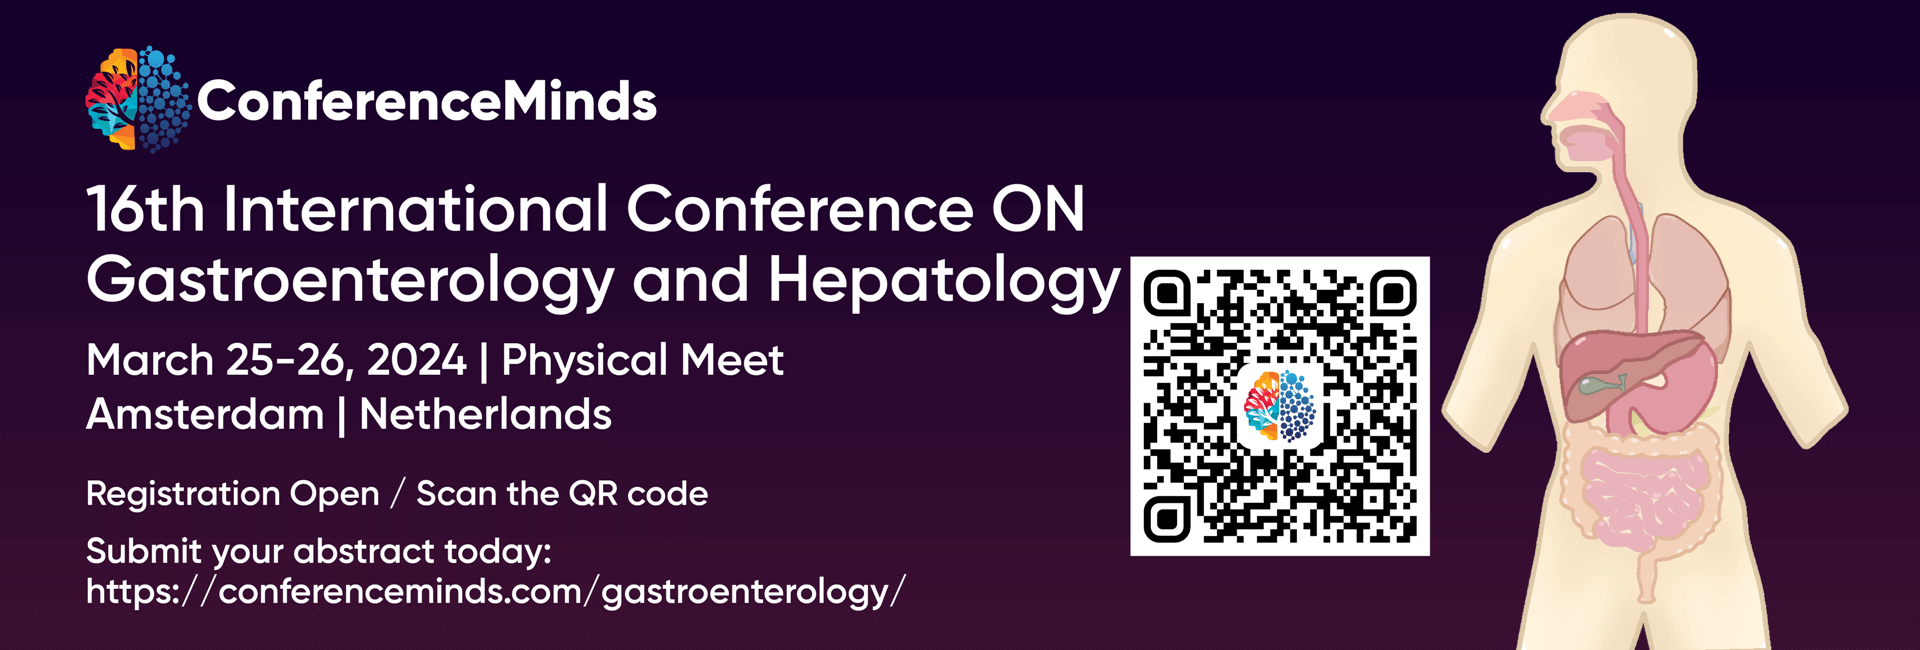 Gastroenterology Conferences 2024 Gastro Conference 2024 Hepatology